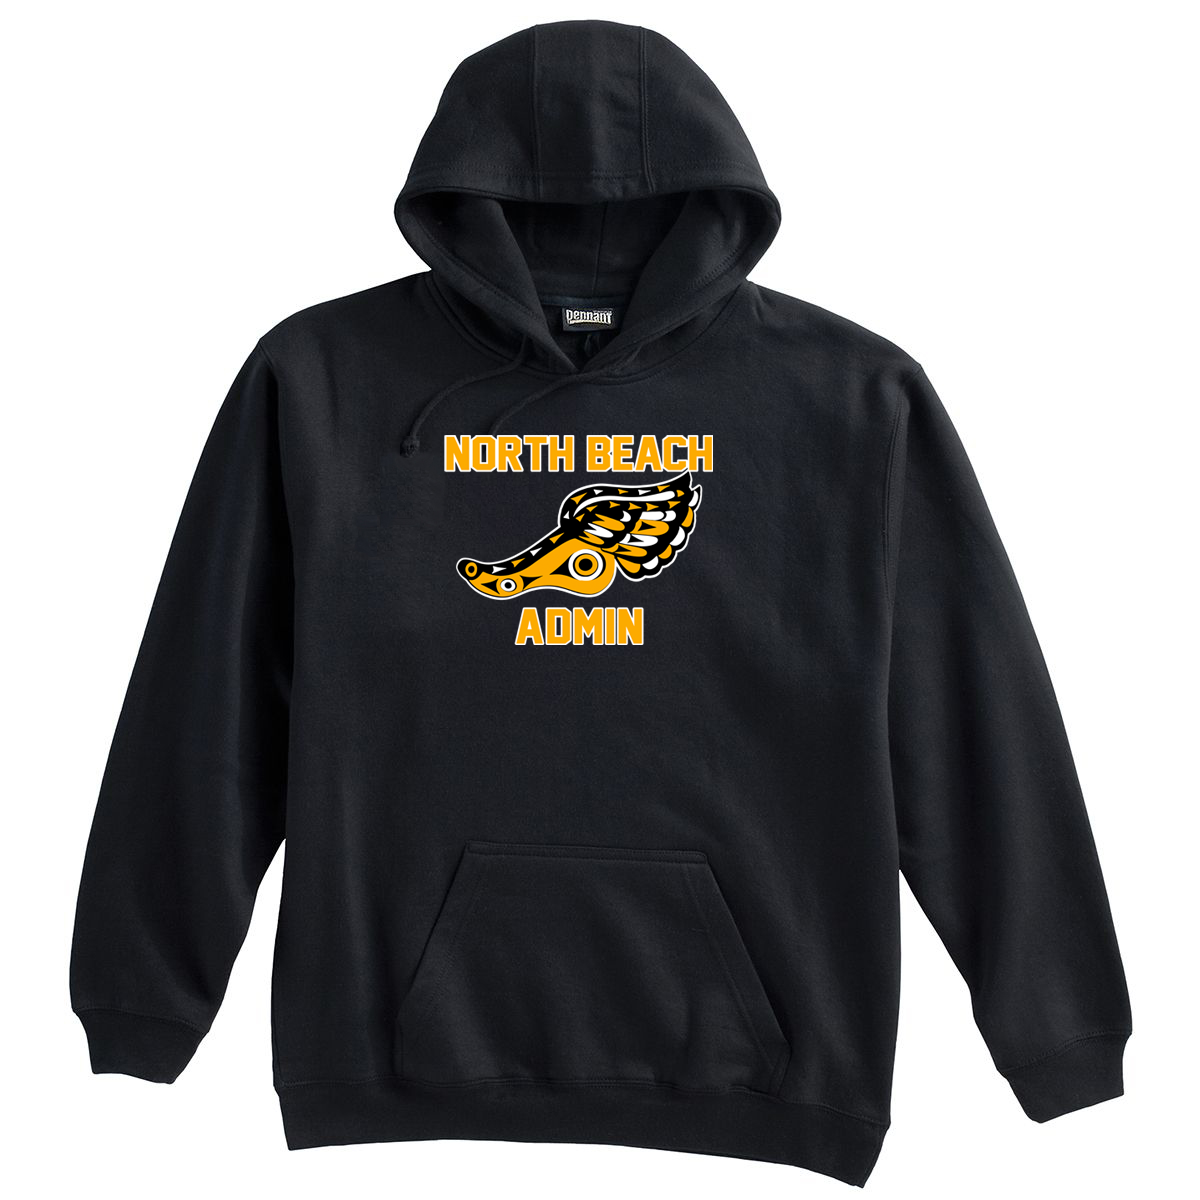 North Beach Admin Sweatshirt